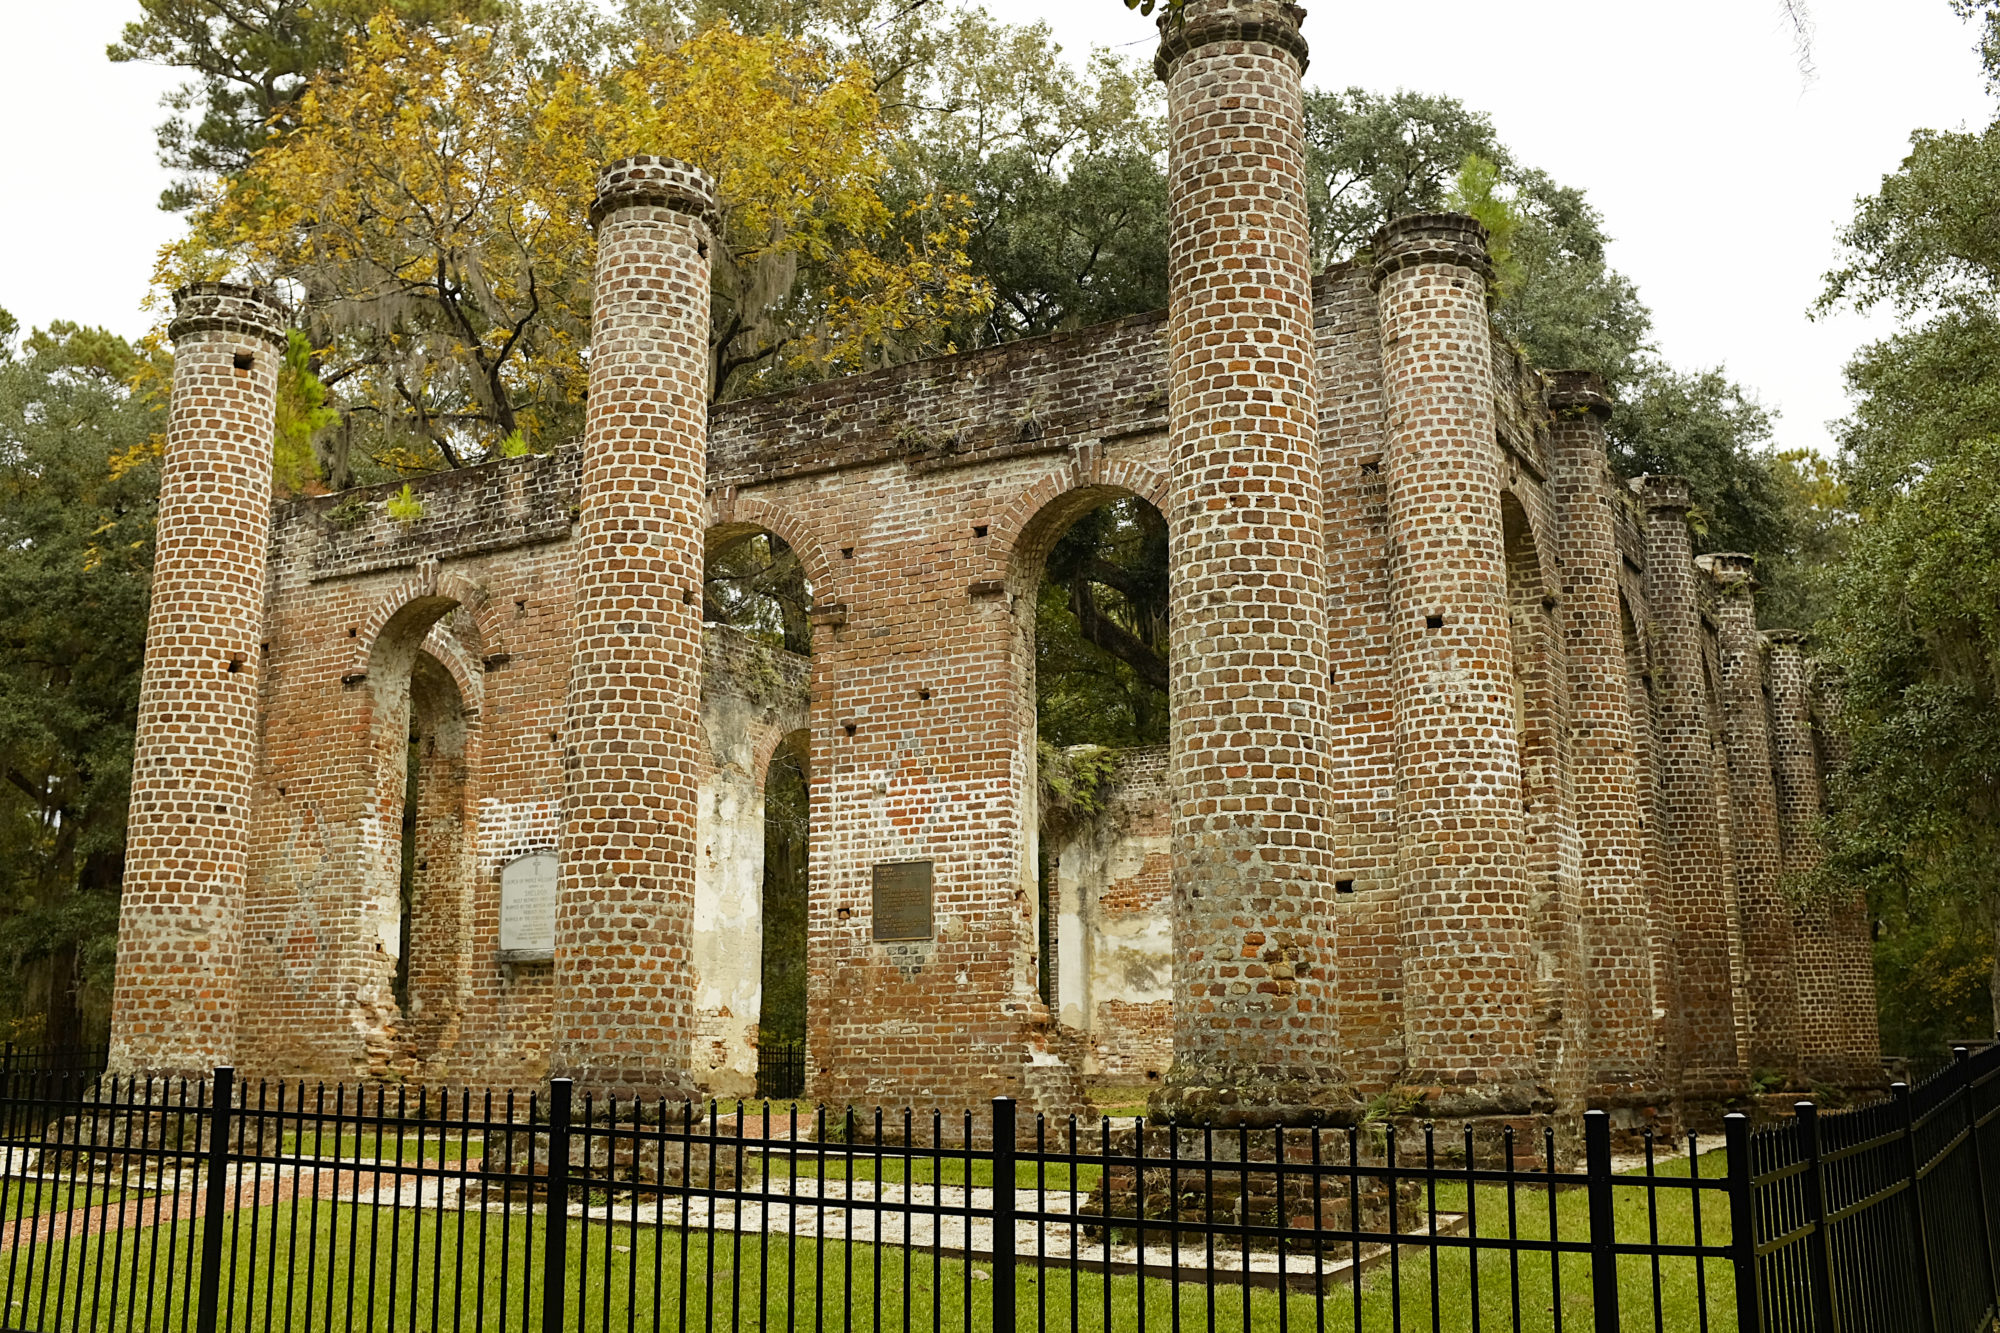 Image of the Prince William Parish Church/Old Sheldon Church Ruins